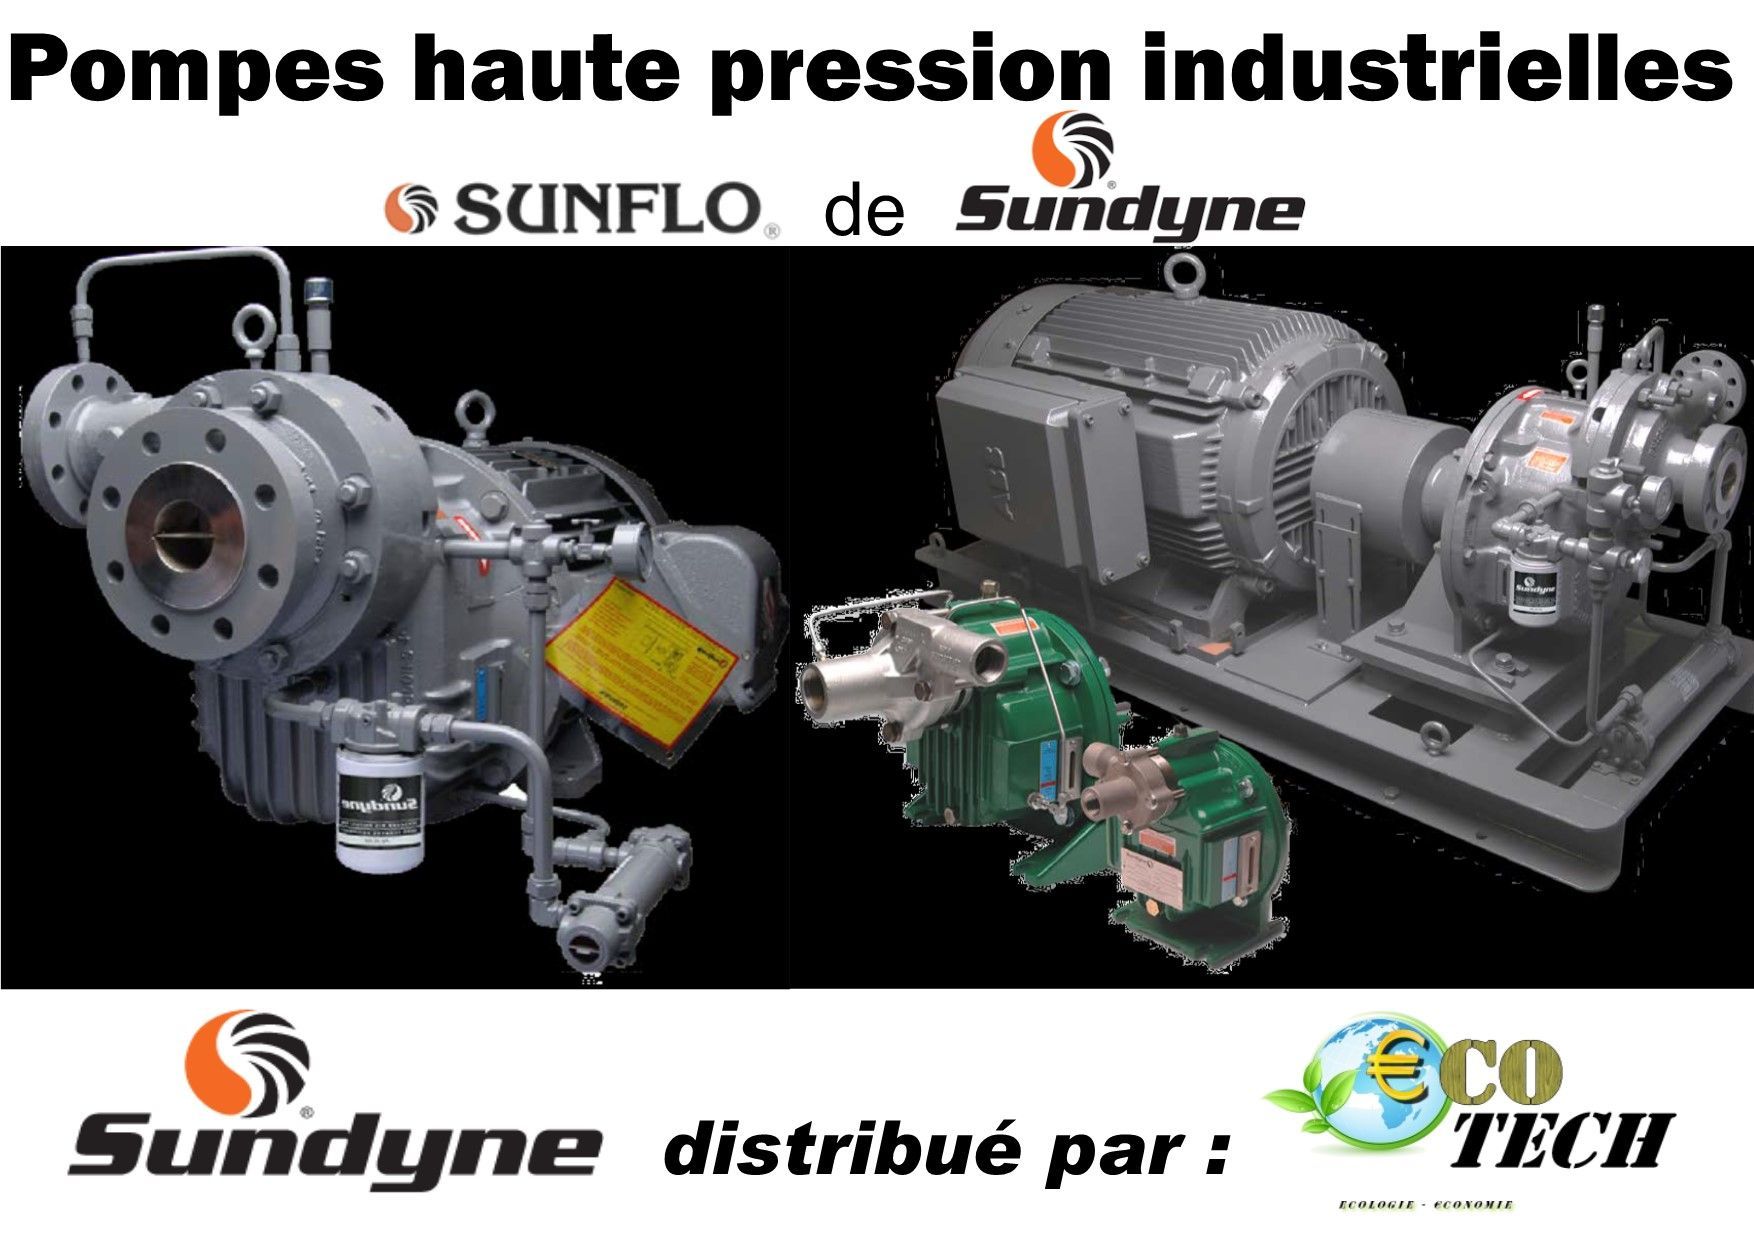 Sundyne série sunflo - pompe centrifuge haute pression industrielle_0